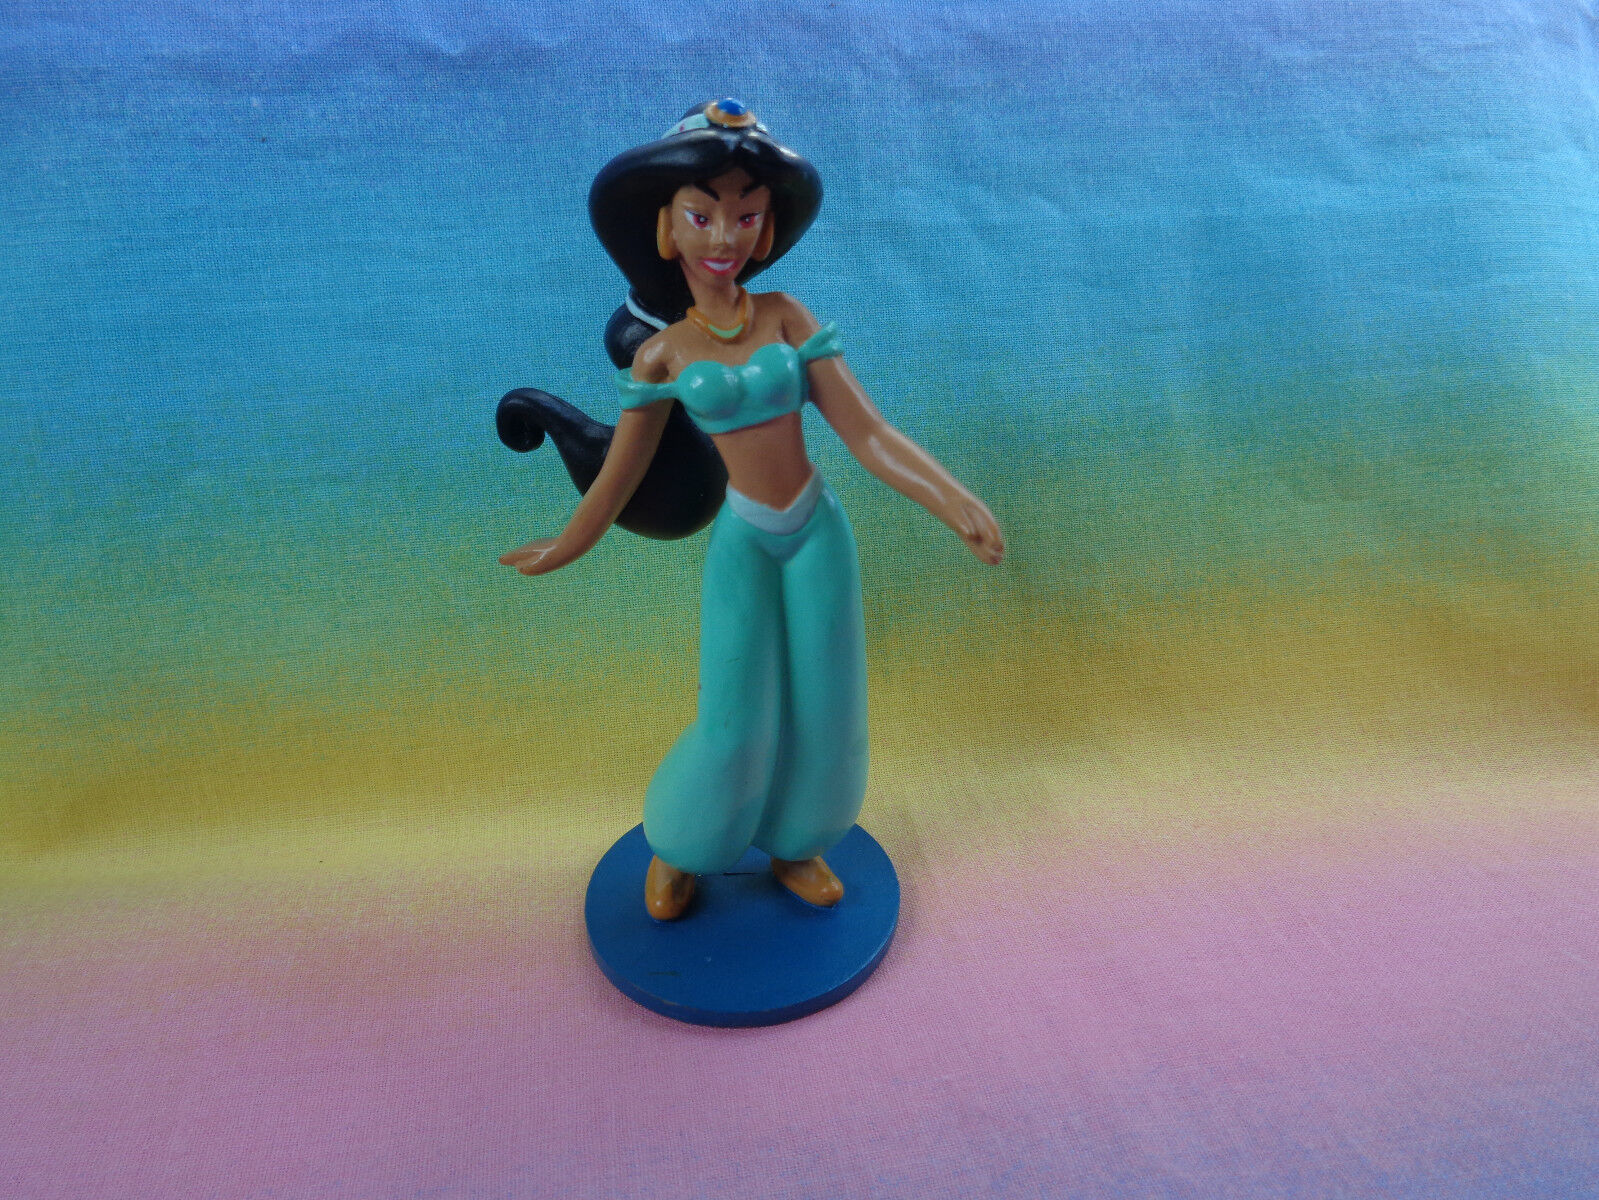 Primary image for Disney Aladdin Princess Jasmine PVC Figure on Teal Base - as is